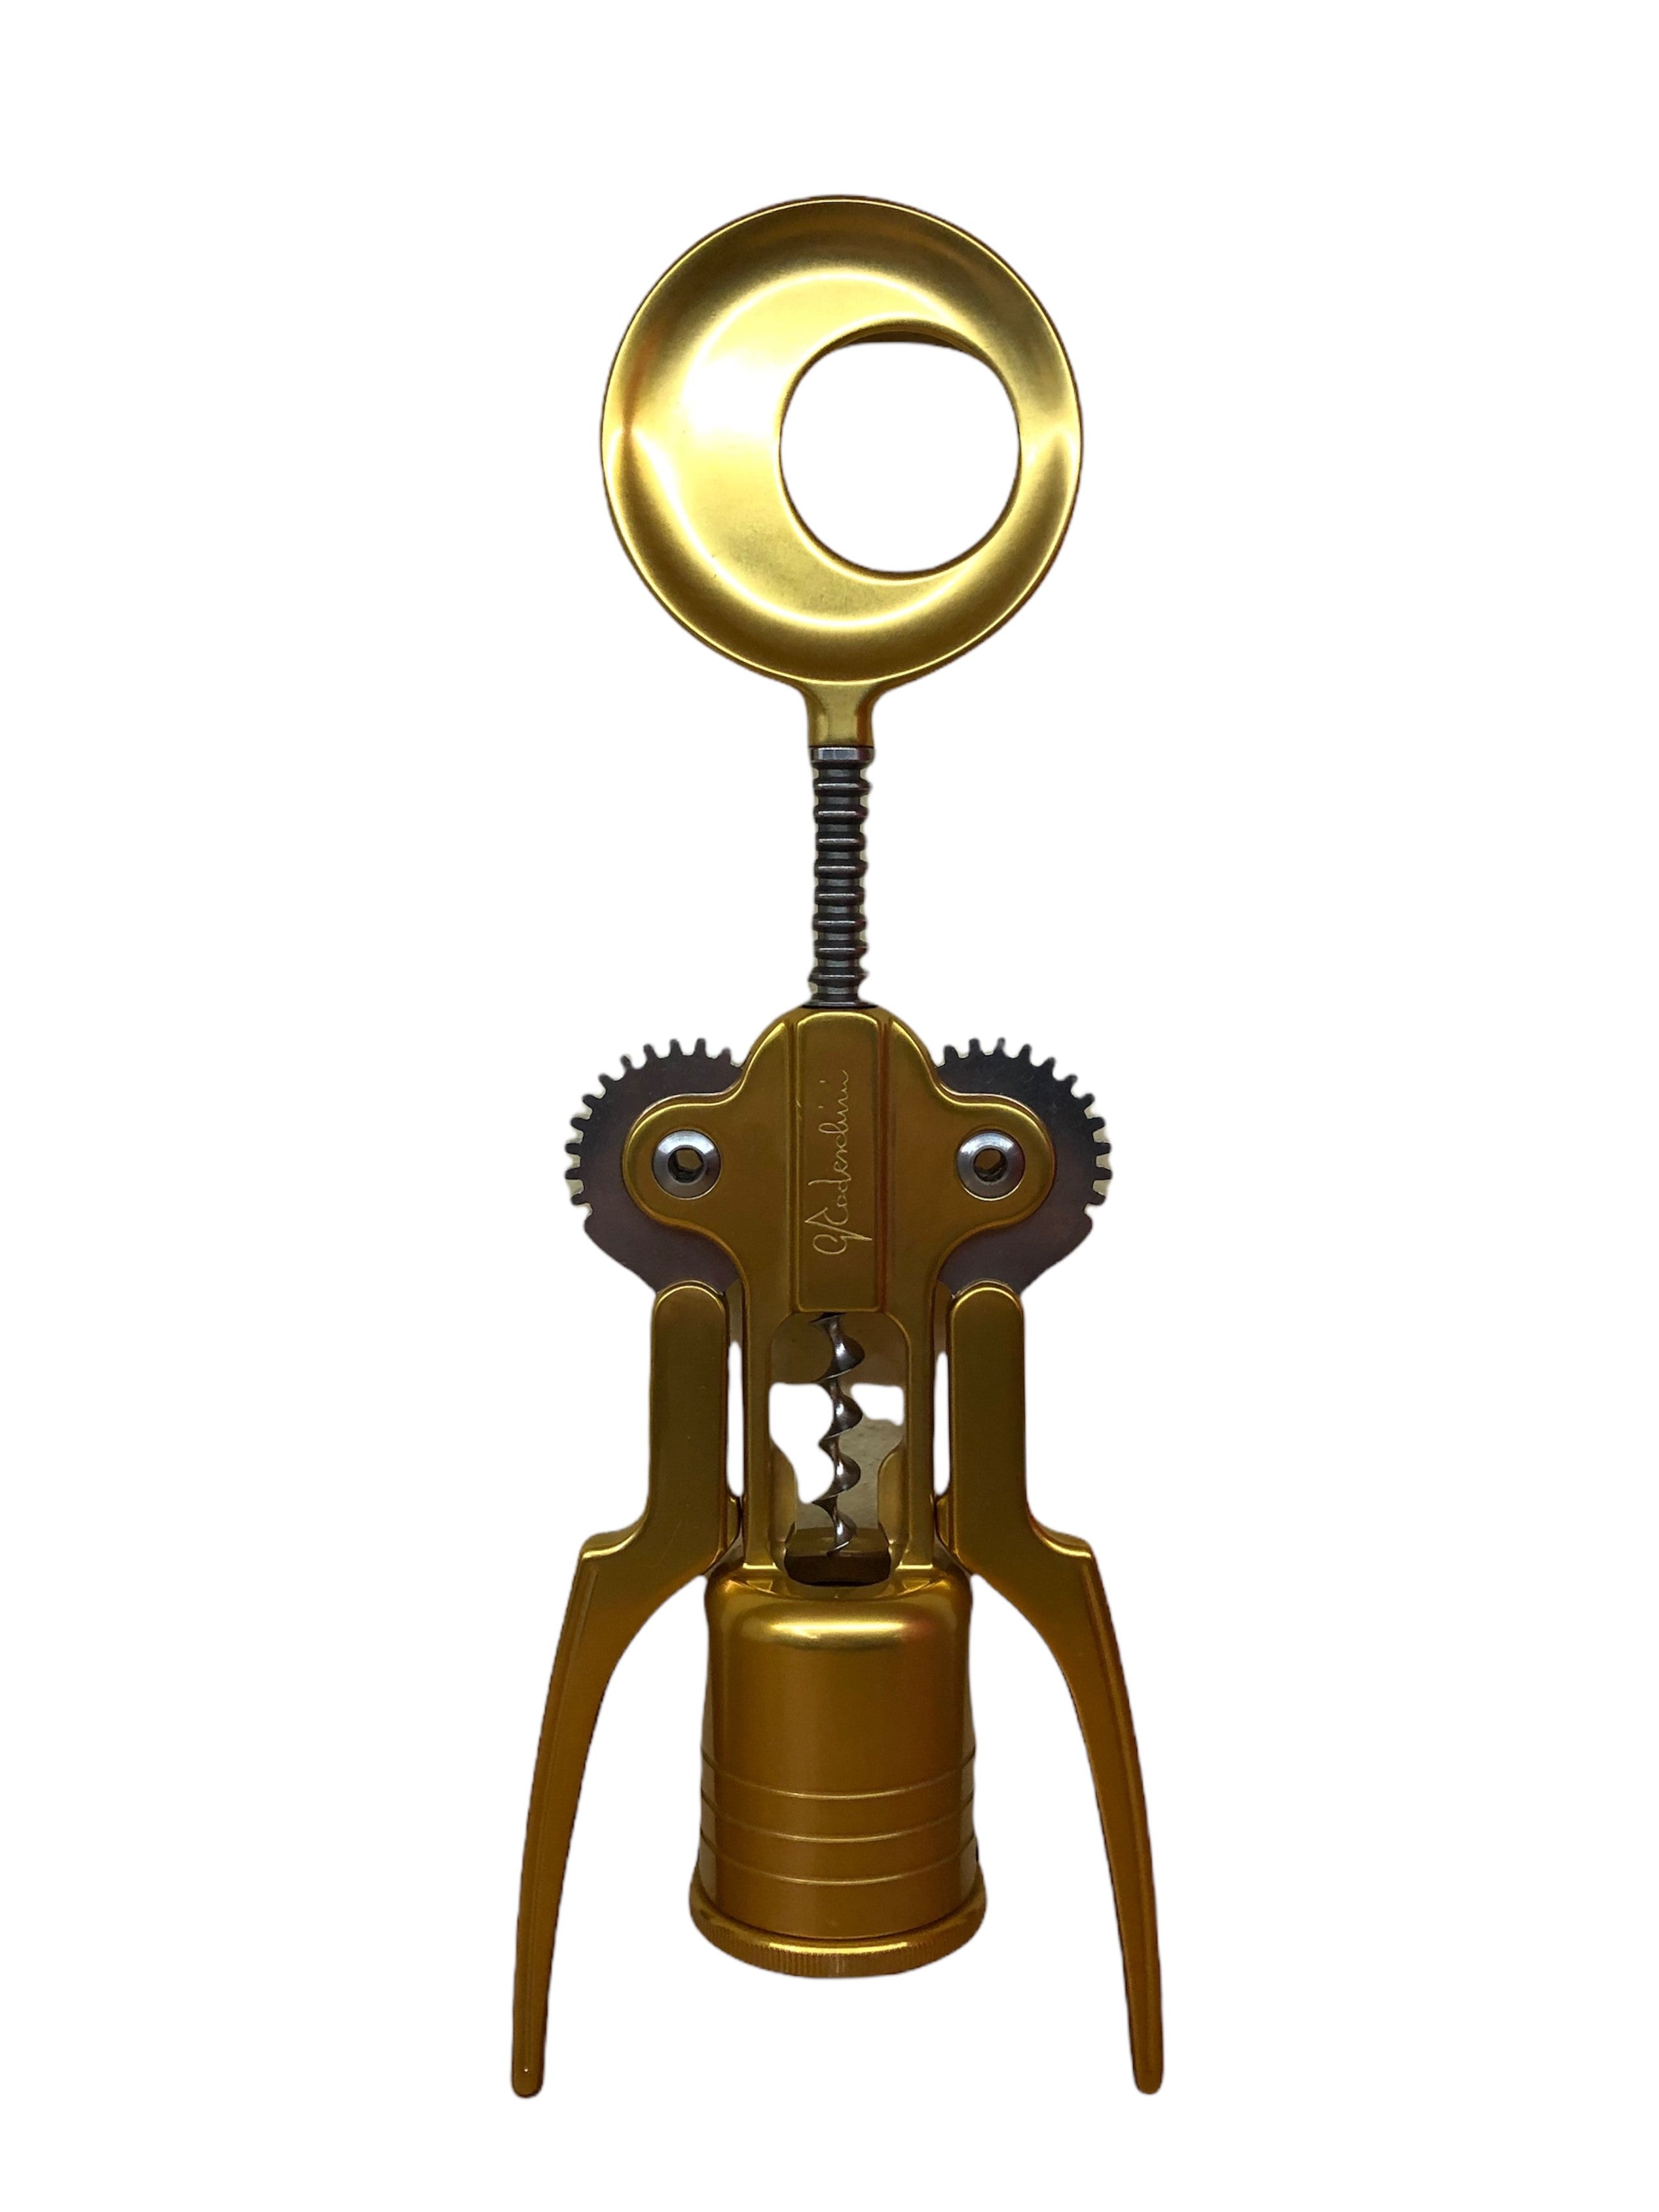 Artis Platinum Patented Gold Corkscrew with Sliding Bell